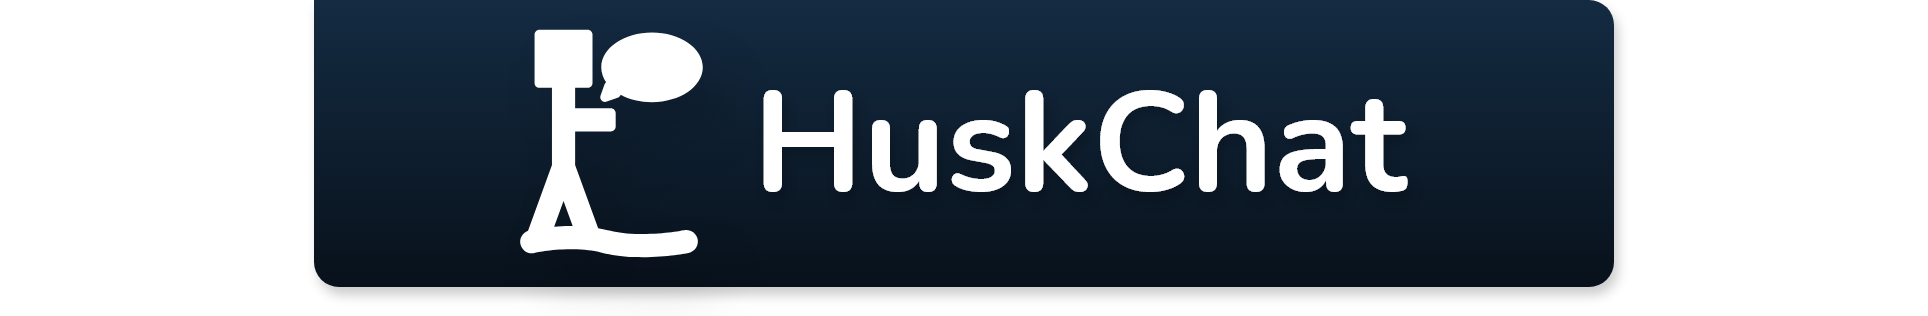 HuskChat banner